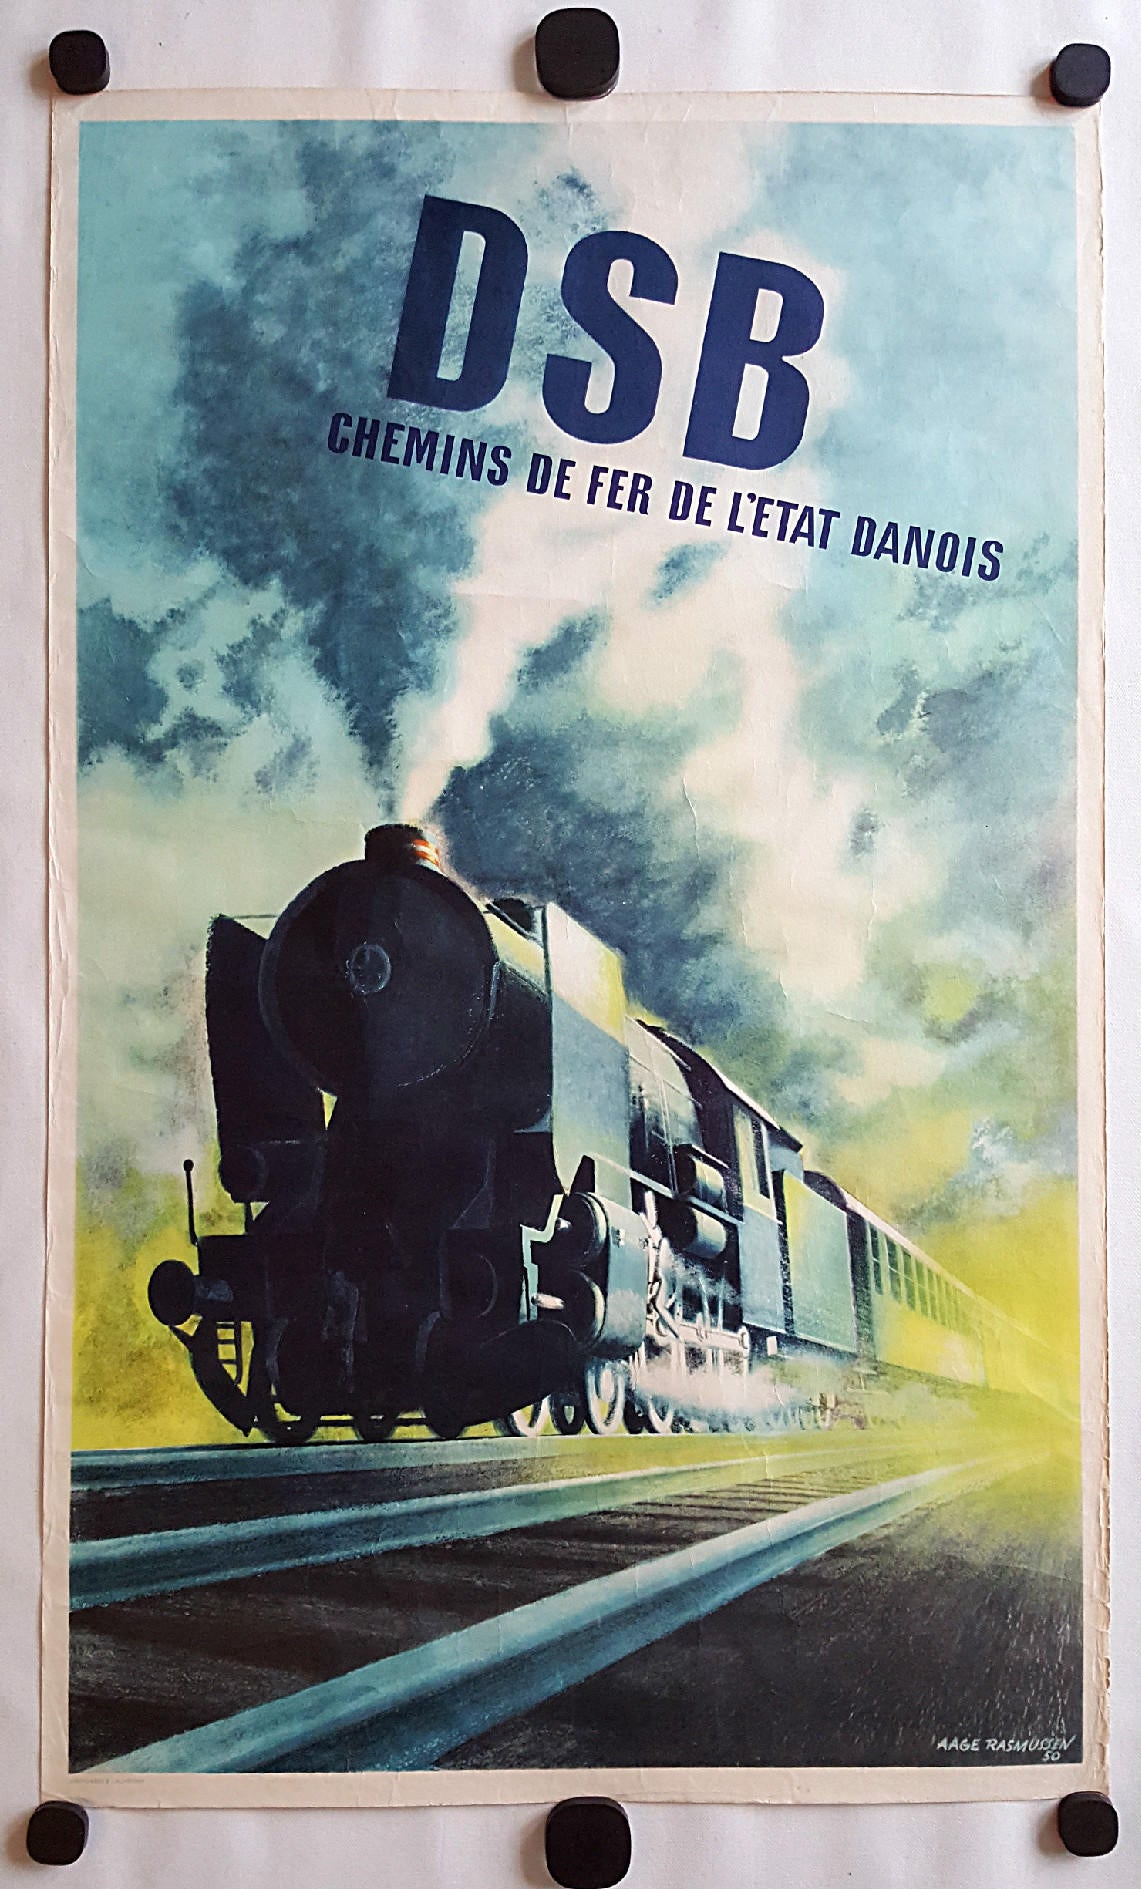 1950 Steam Locomotive by Aage Rasmussen for Danish State Rails - Original Vintage Poster